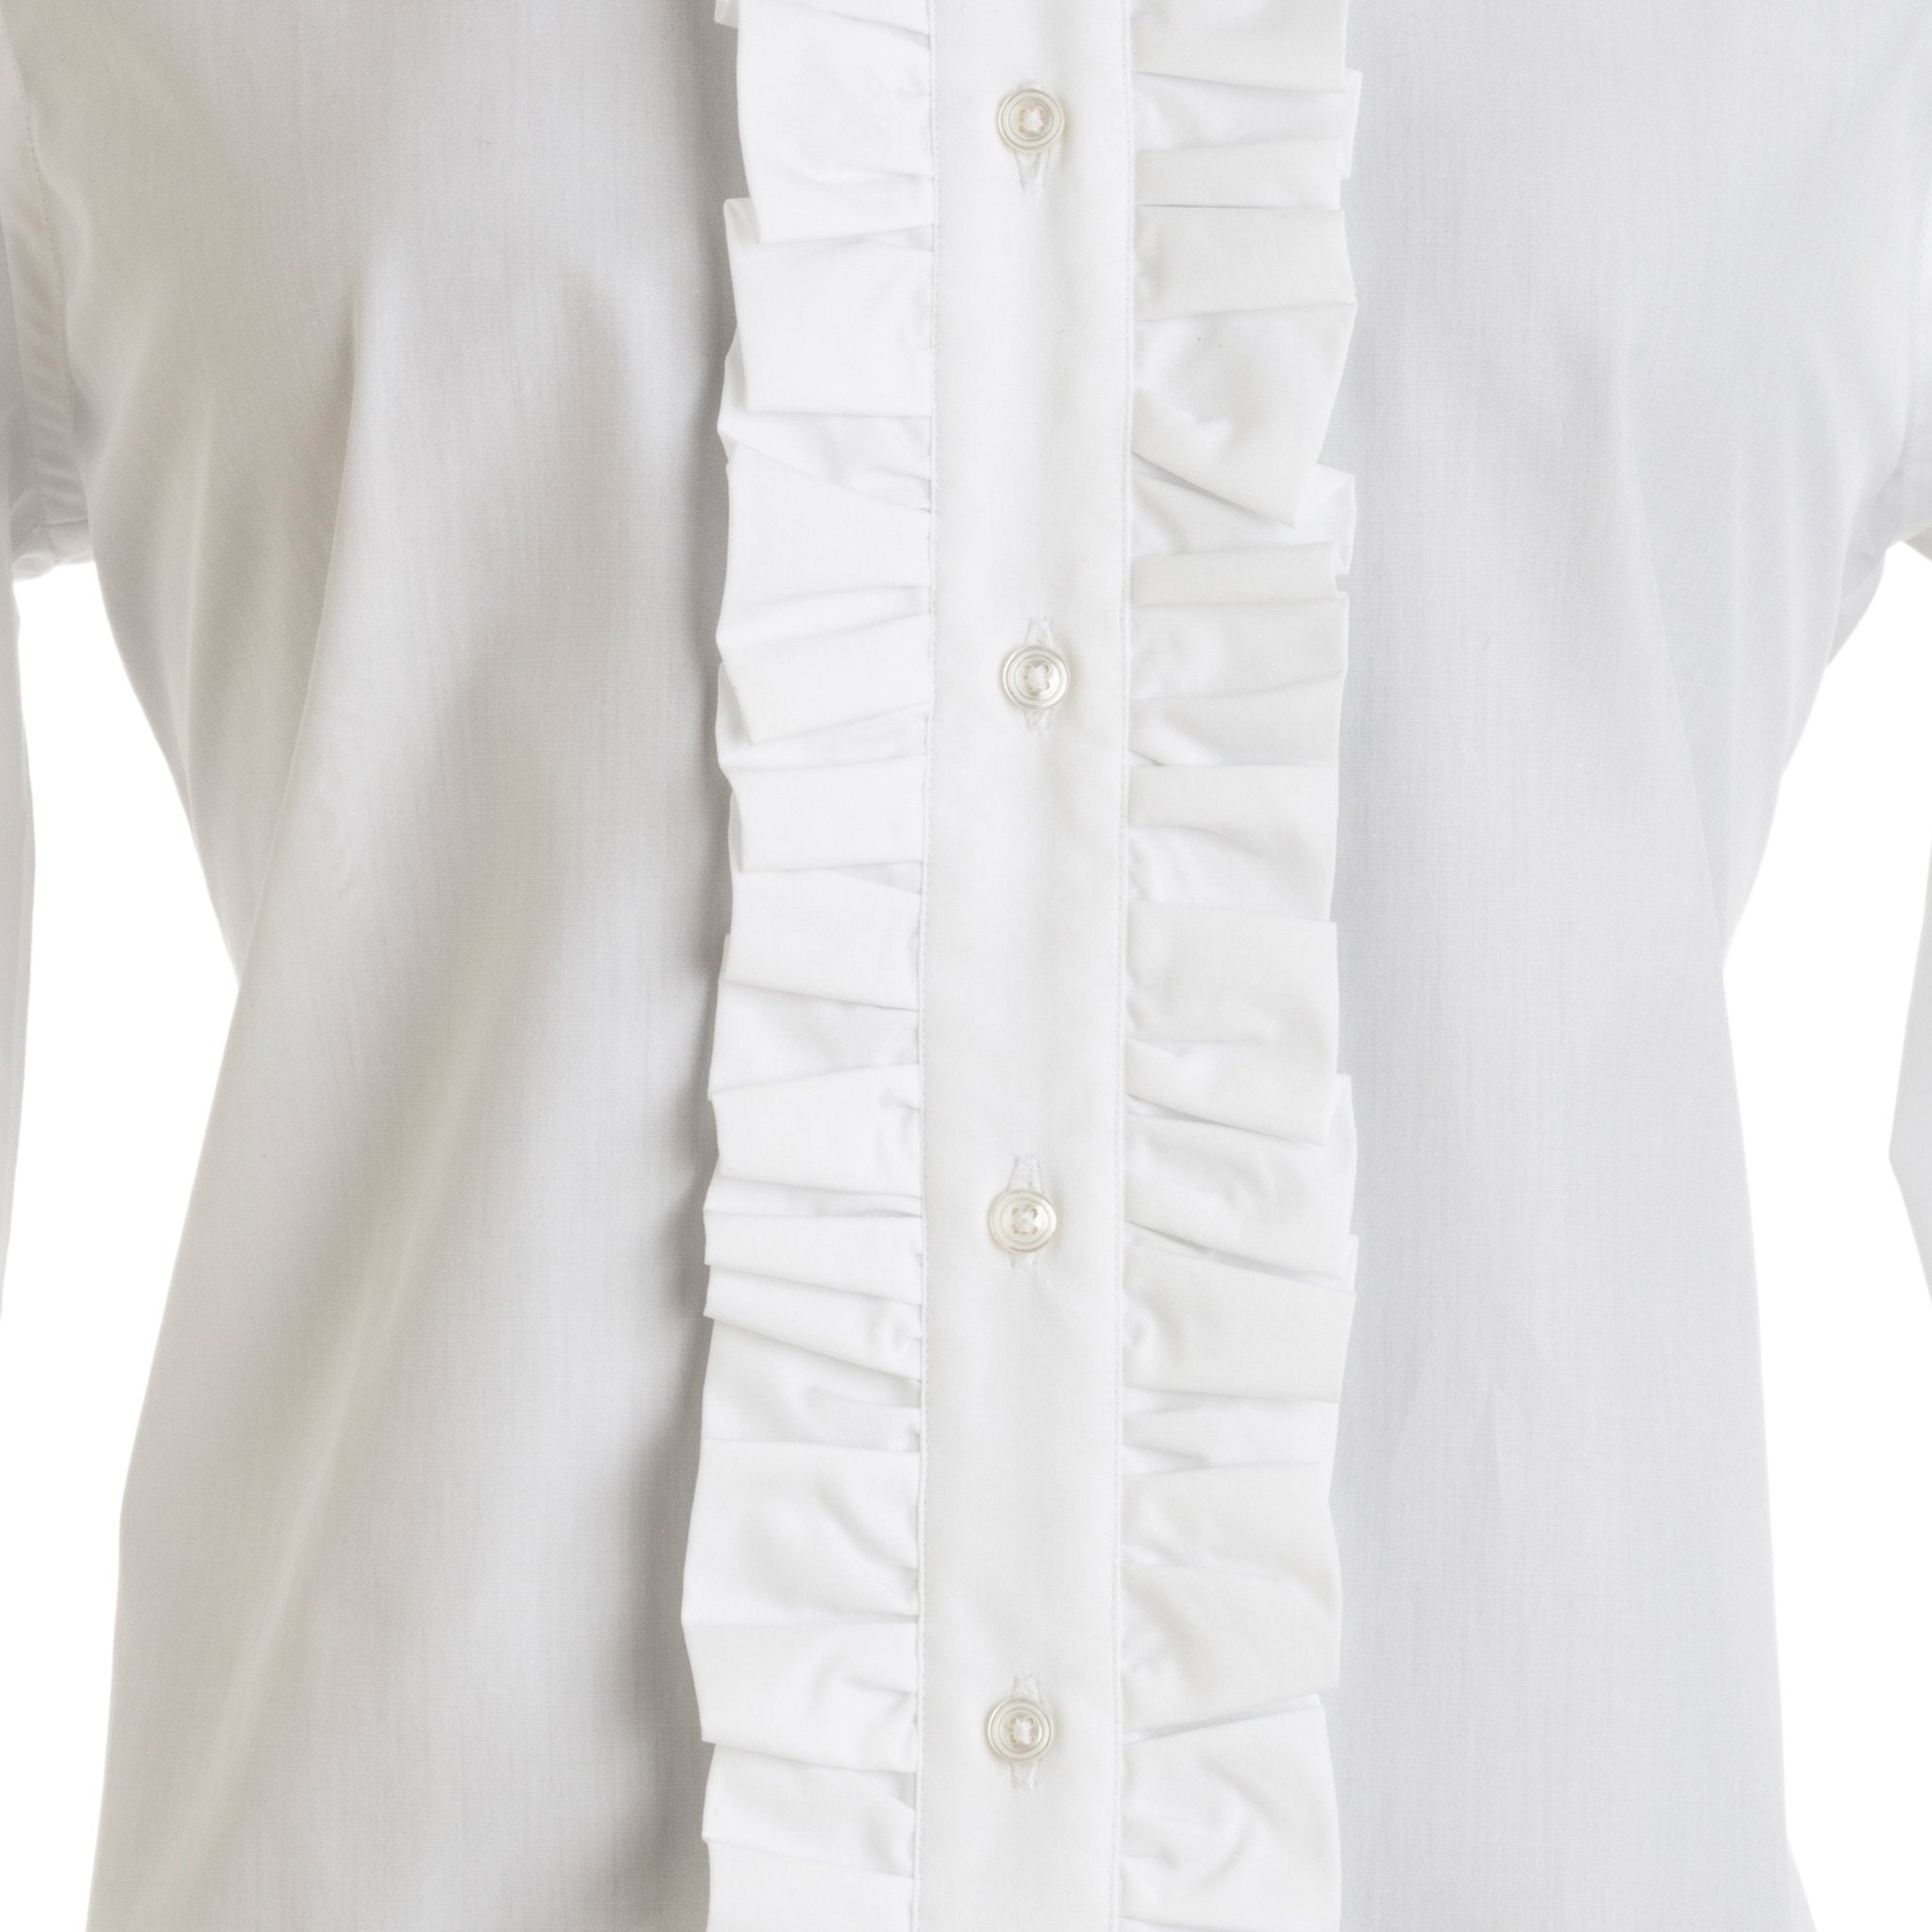 White Superior Cotton - Piccadilly Shirt freeshipping - Emma Willis